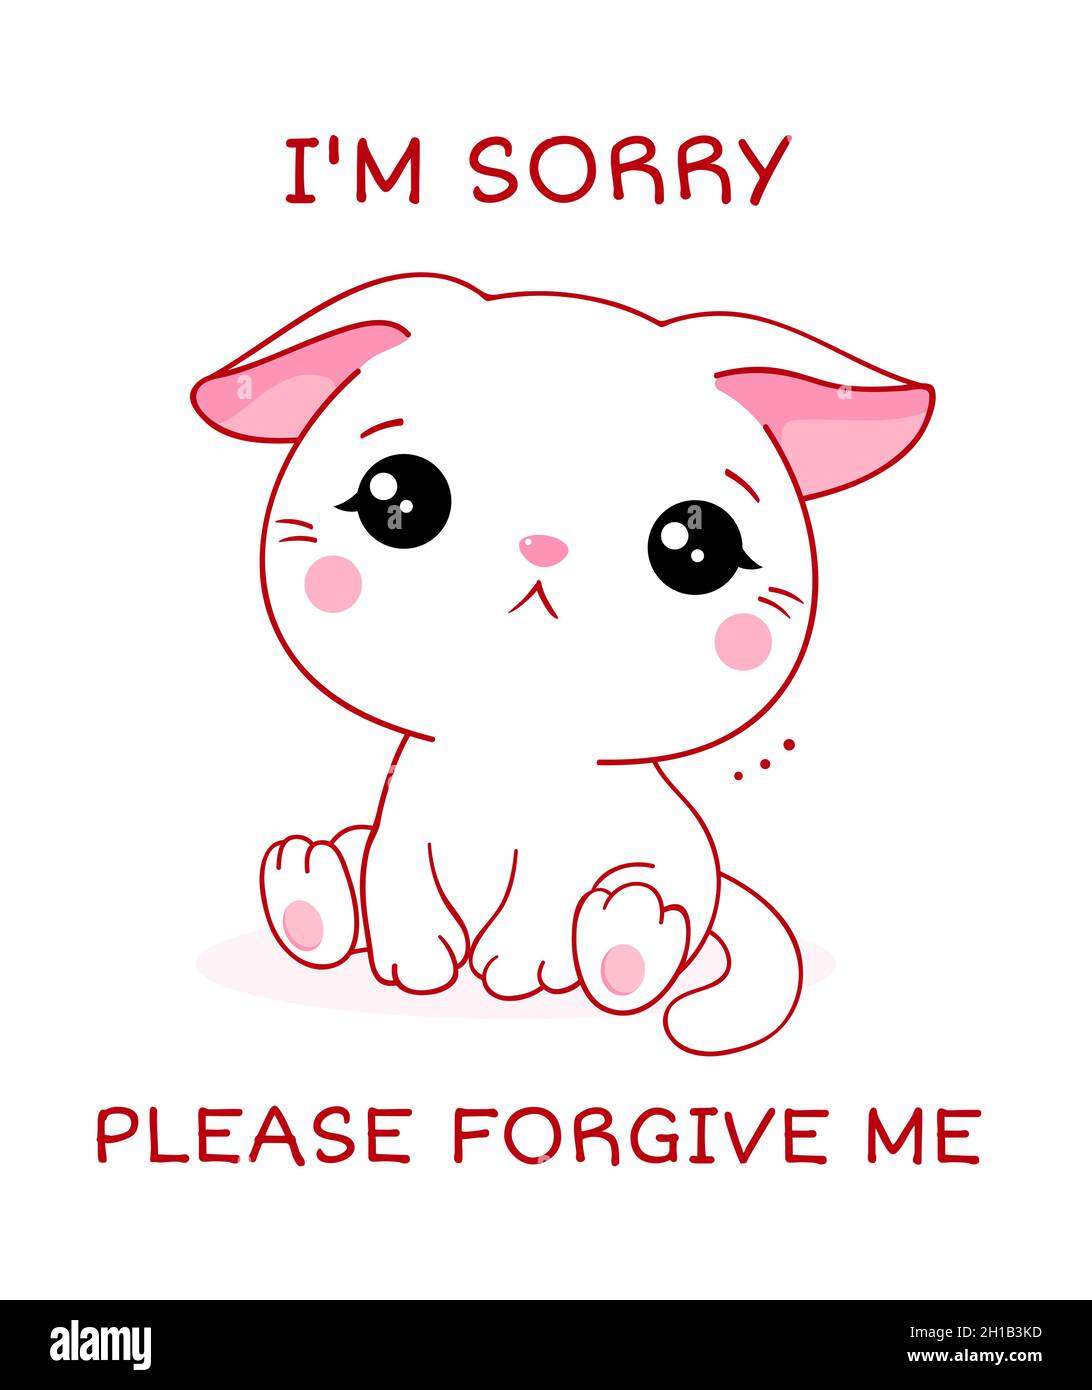 Tarjeta de disculpas. Triste gatito e inscripción Lo siento, por favor  perdóname. Lindo gato bebé pedir disculpas. Ilustración vectorial EPS8  Imagen Vector de stock - Alamy